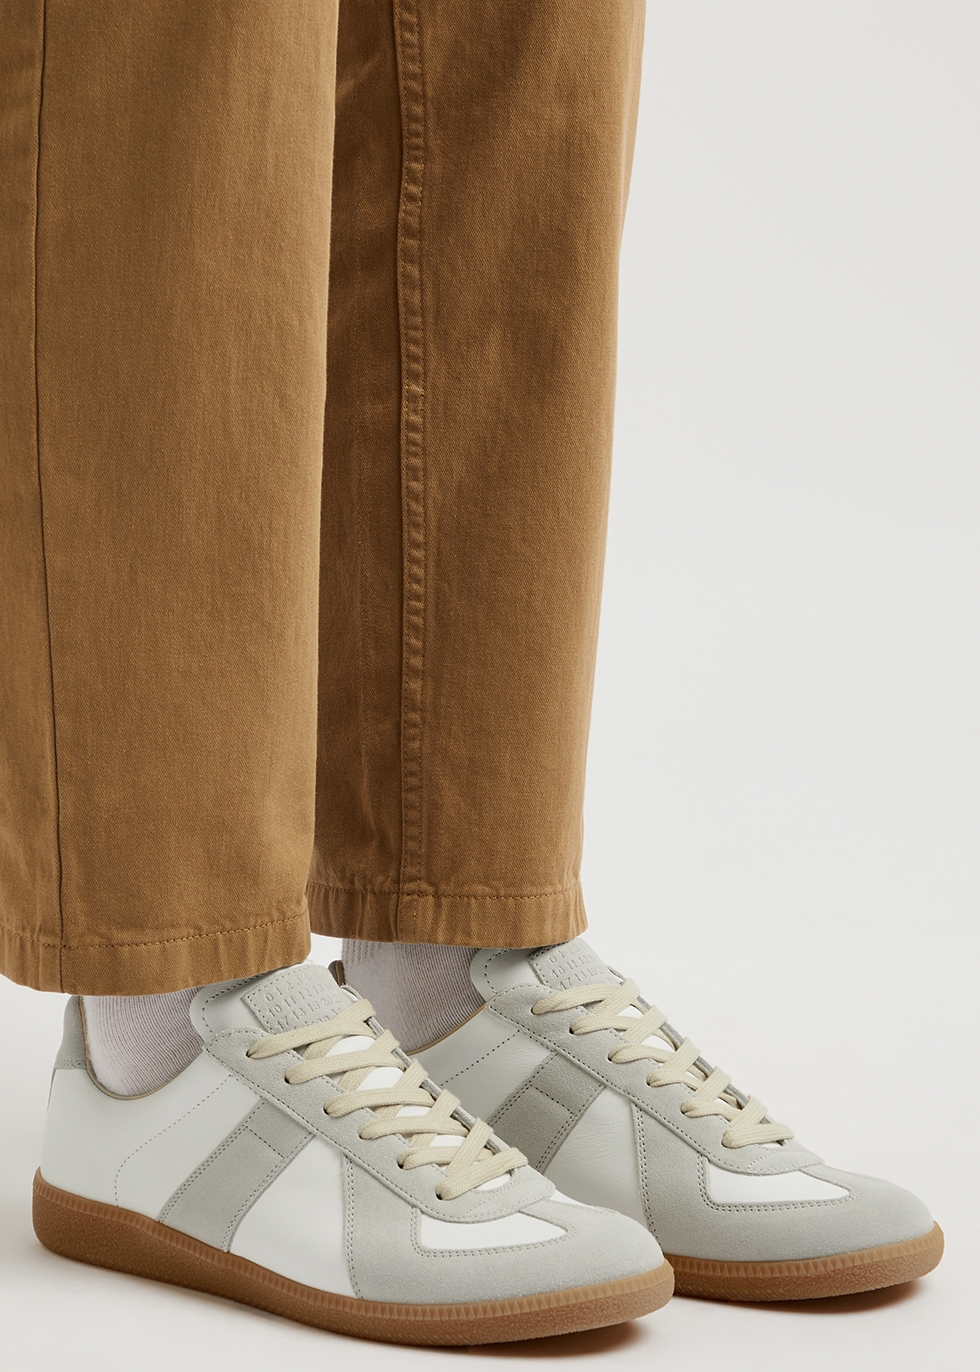 Maison Margiela Replica panelled leather sneakers - Harvey Nichols